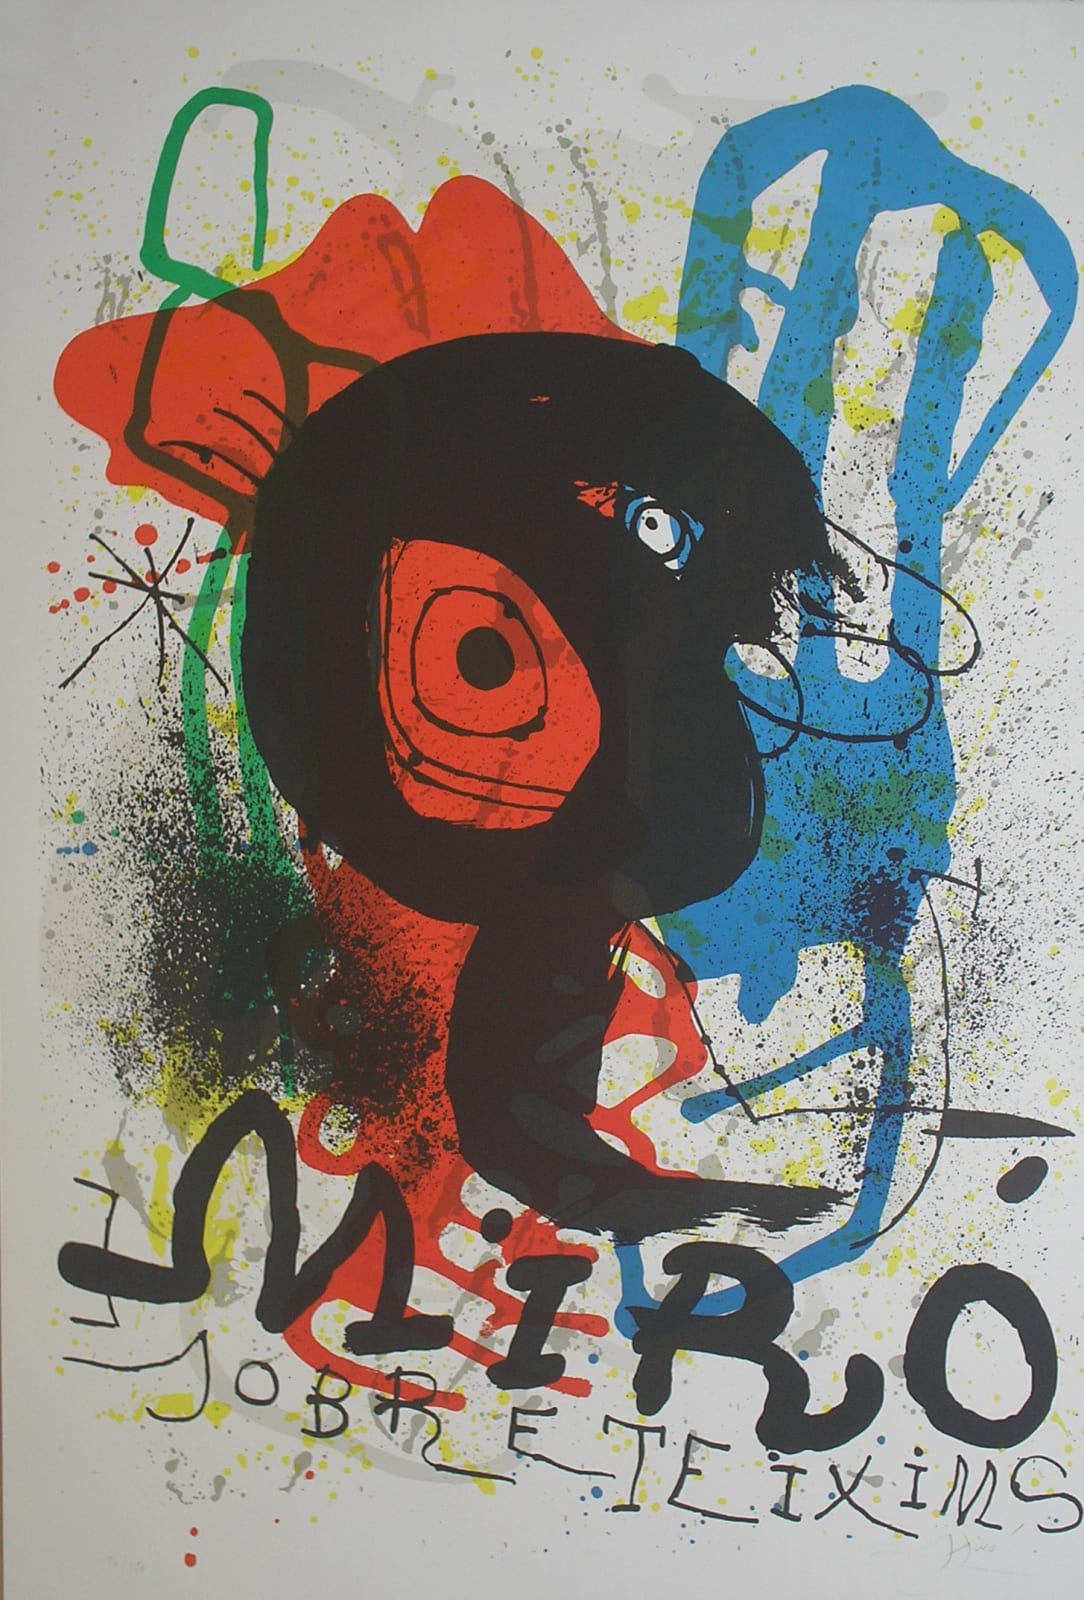 Joan Miro (1893-1983), Sobreteixims, 1973 | Nicholas Gallery